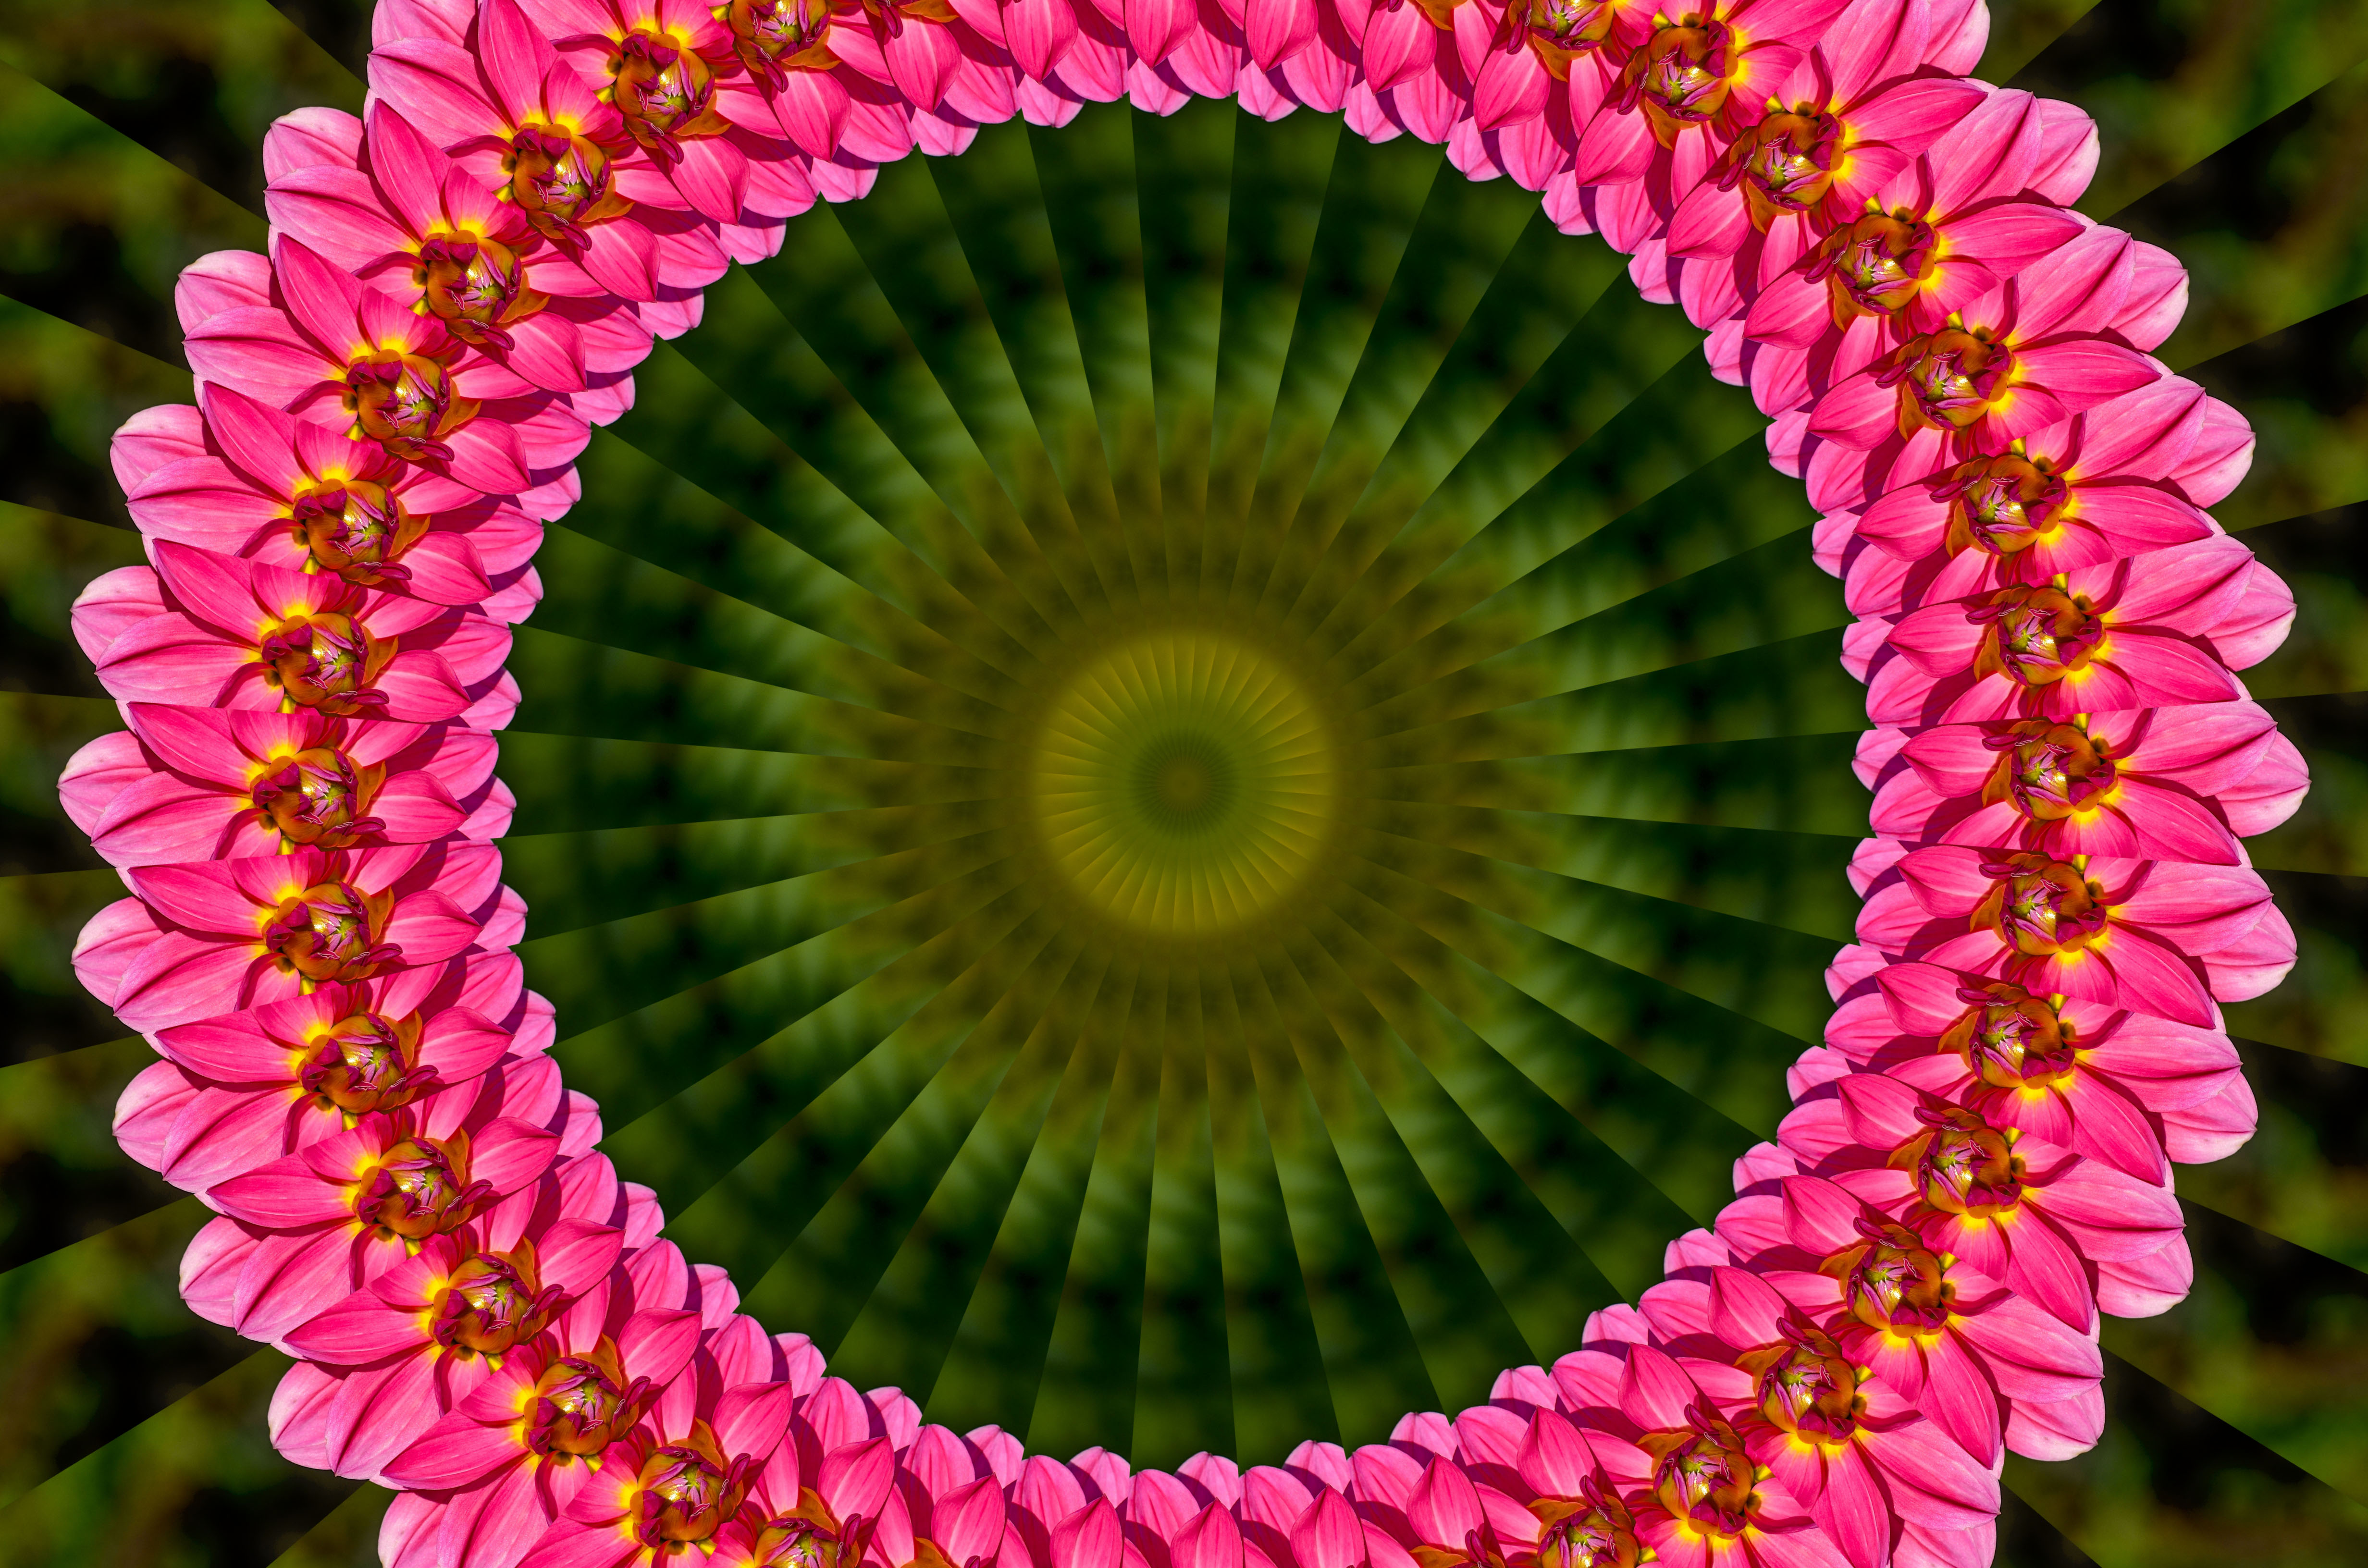 Kaleidoscope Art by Susanlu4esm